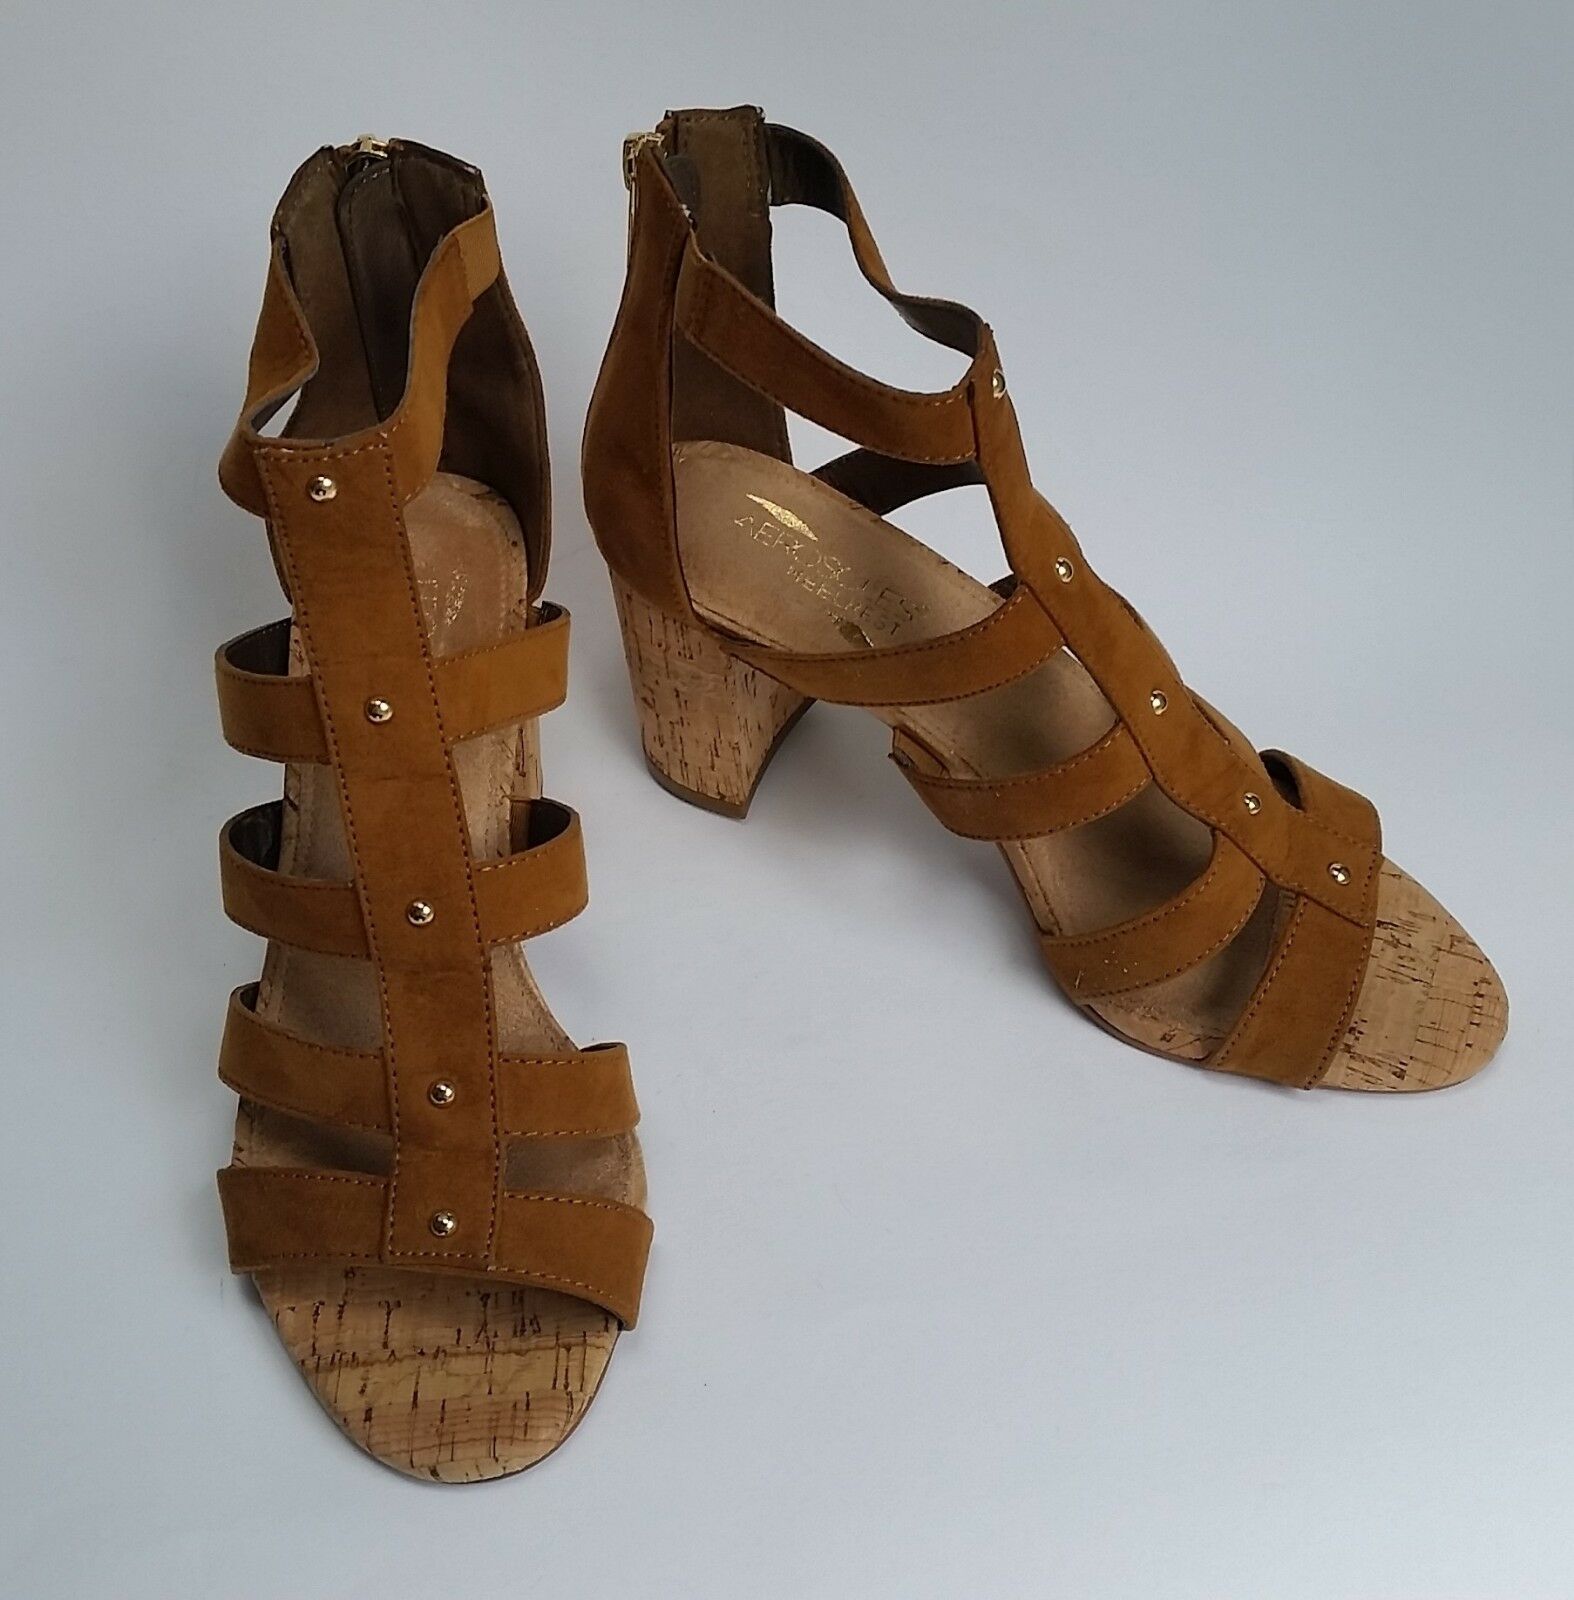 Aerosoles Womens Shoes Heels Sandals Zipper at Heel Brown Tan Size 8.5 New